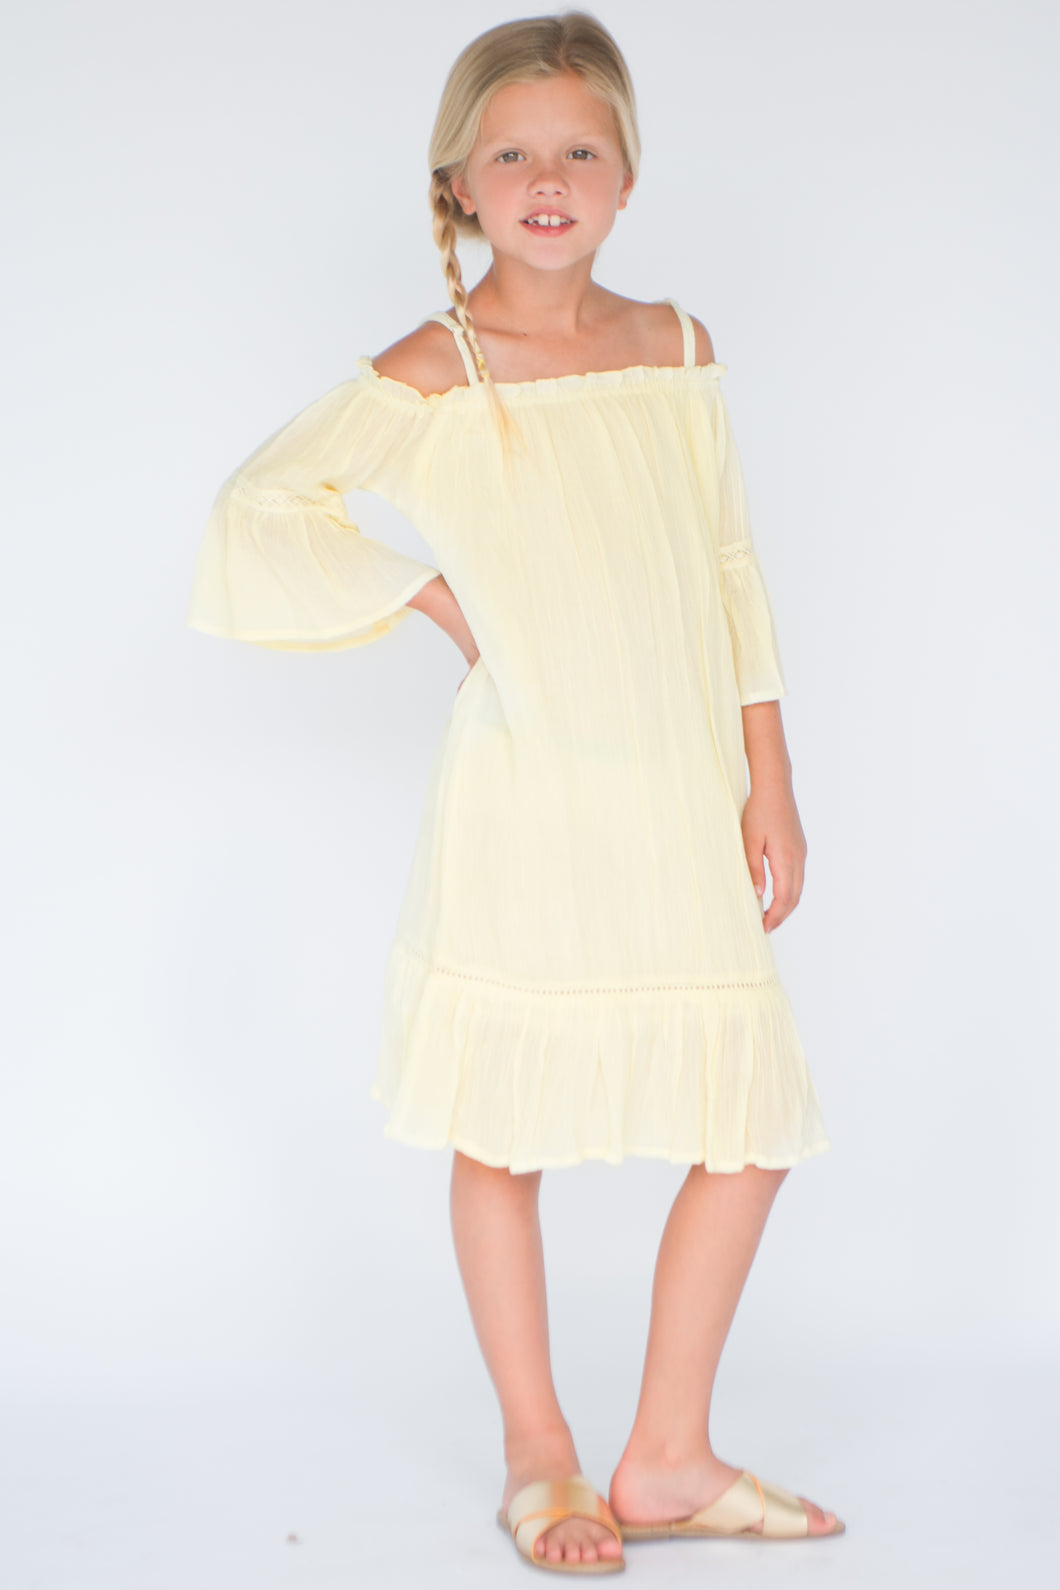 Pastel Yellow Off-Shoulder Dress - Kids Wholesale Boutique Clothing, Dress - Girls Dresses, Yo Baby Wholesale - Yo Baby